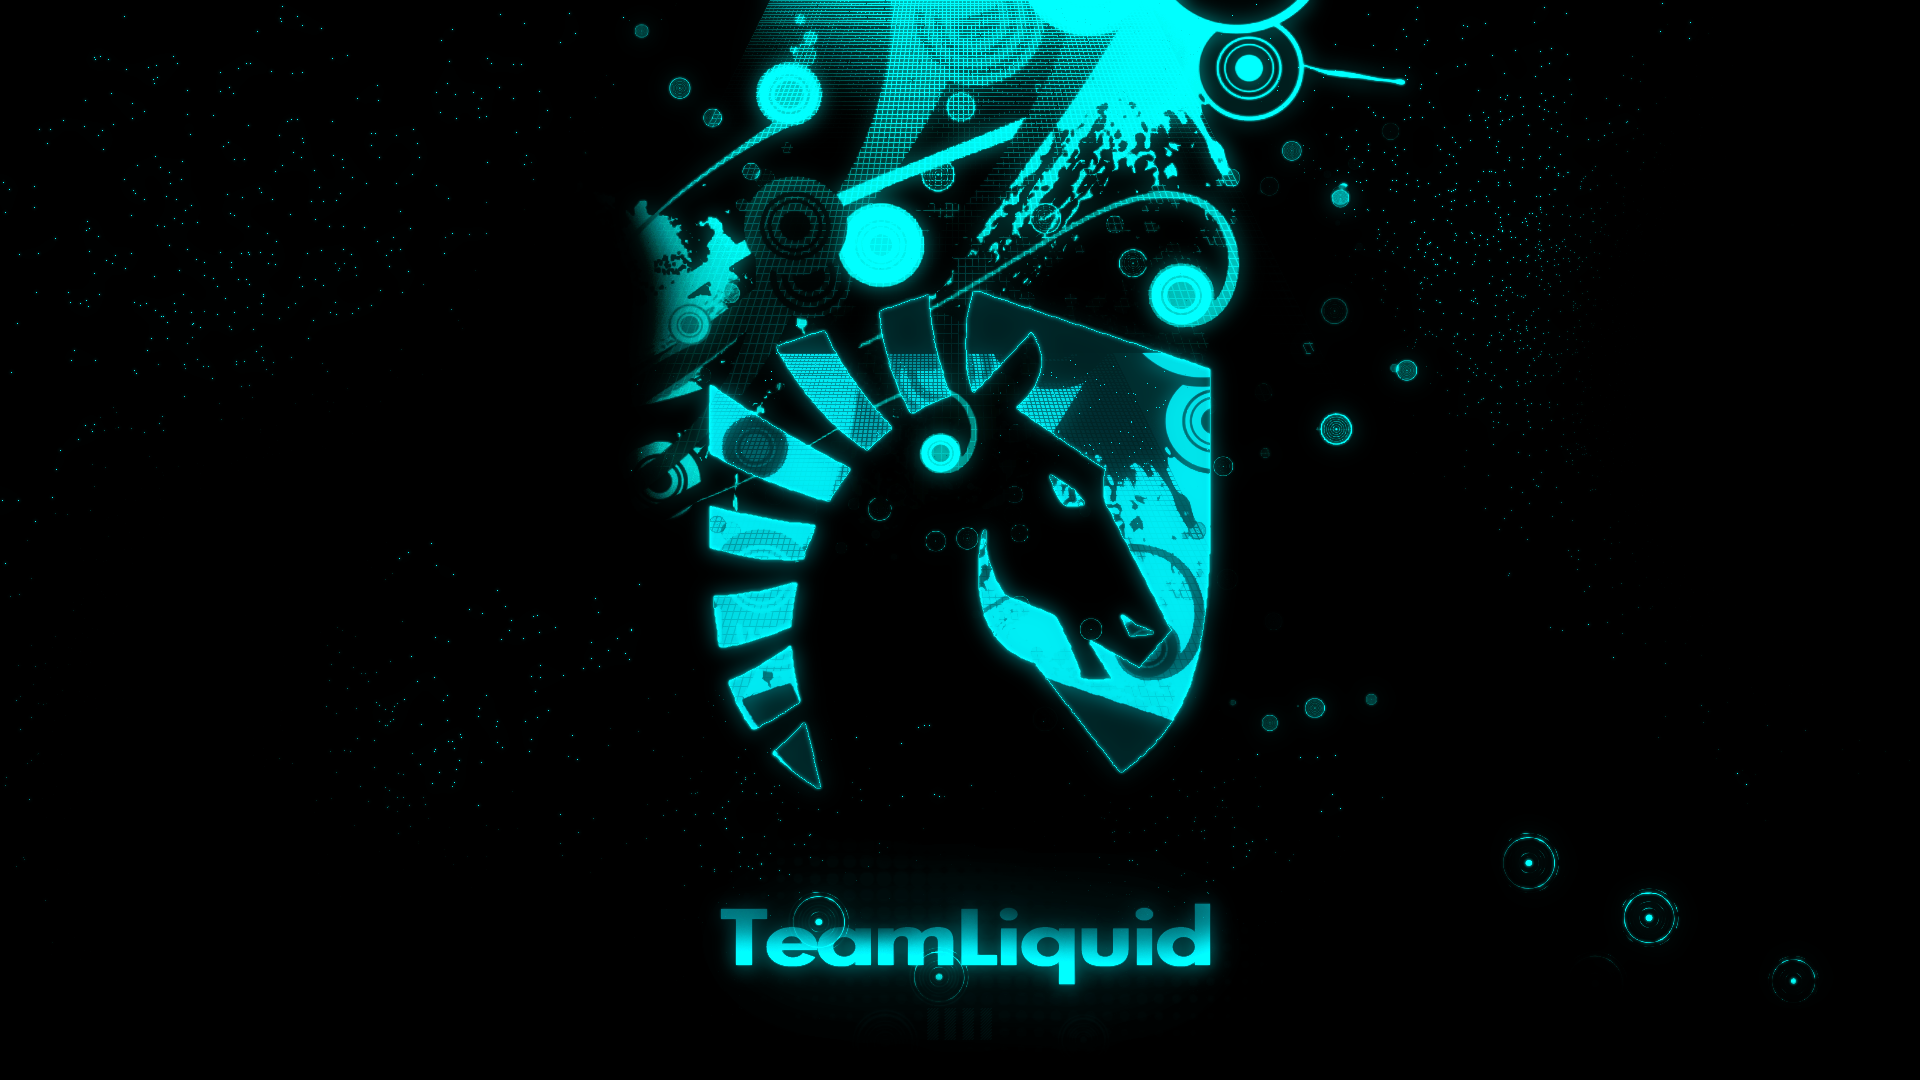 Team liquid wallpaper